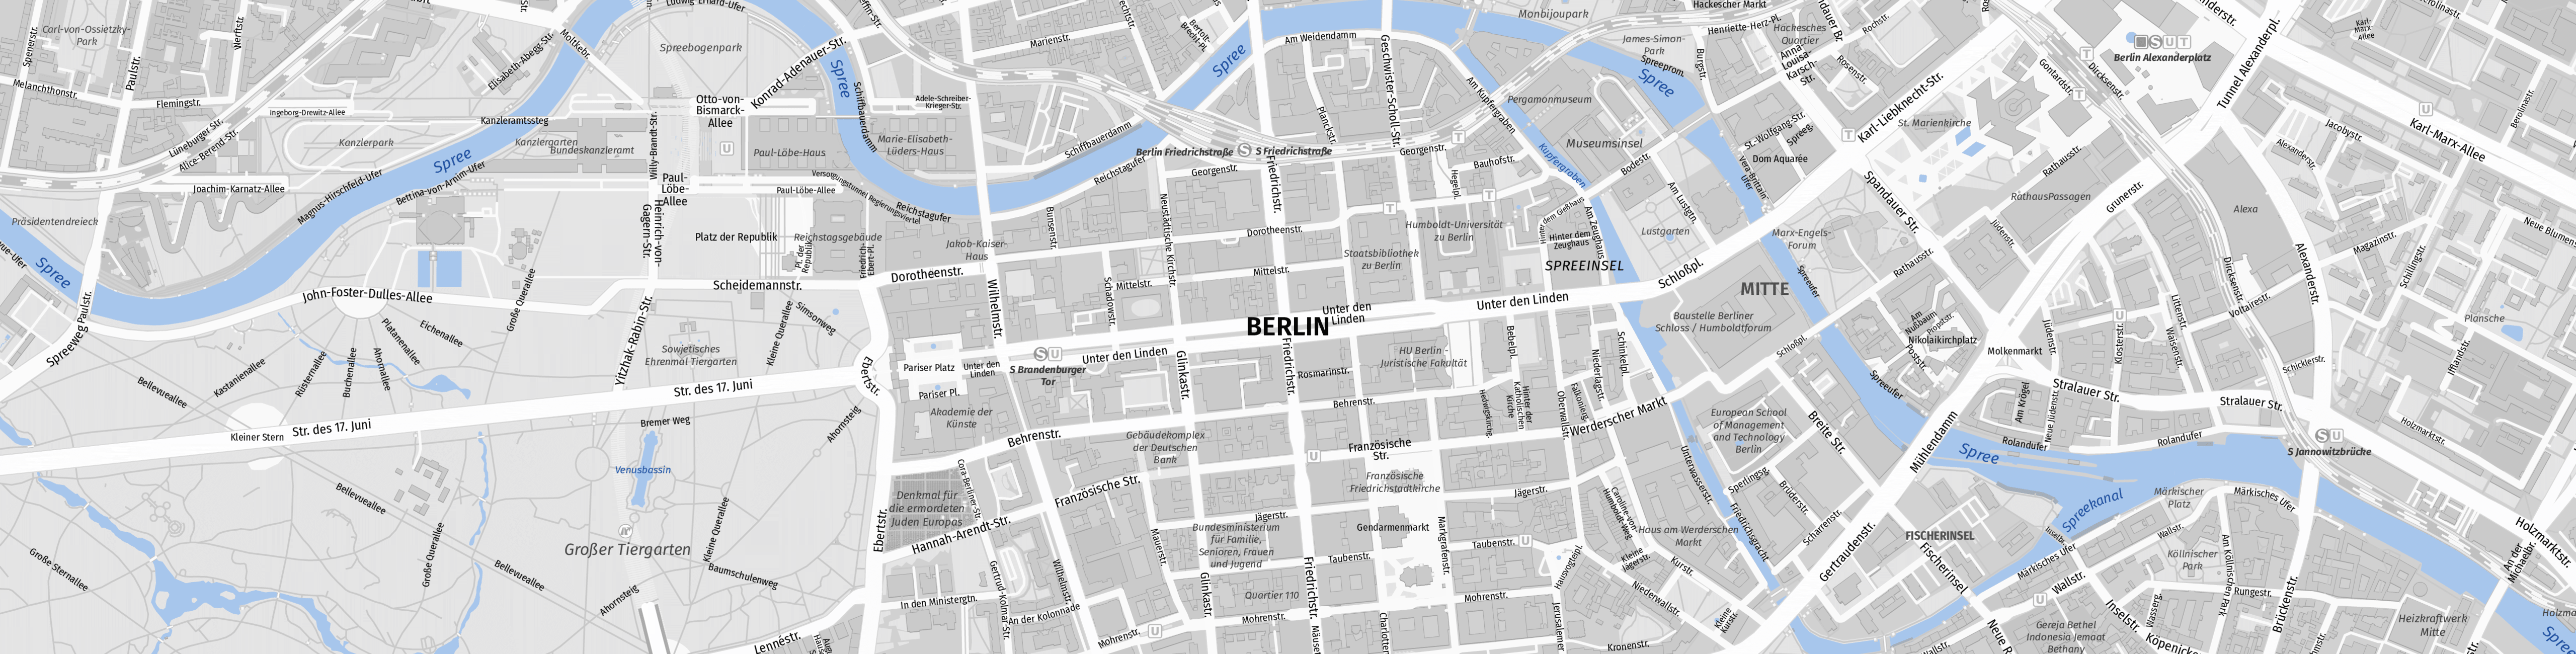 Stadtplan Berlin Vektor PDF Download